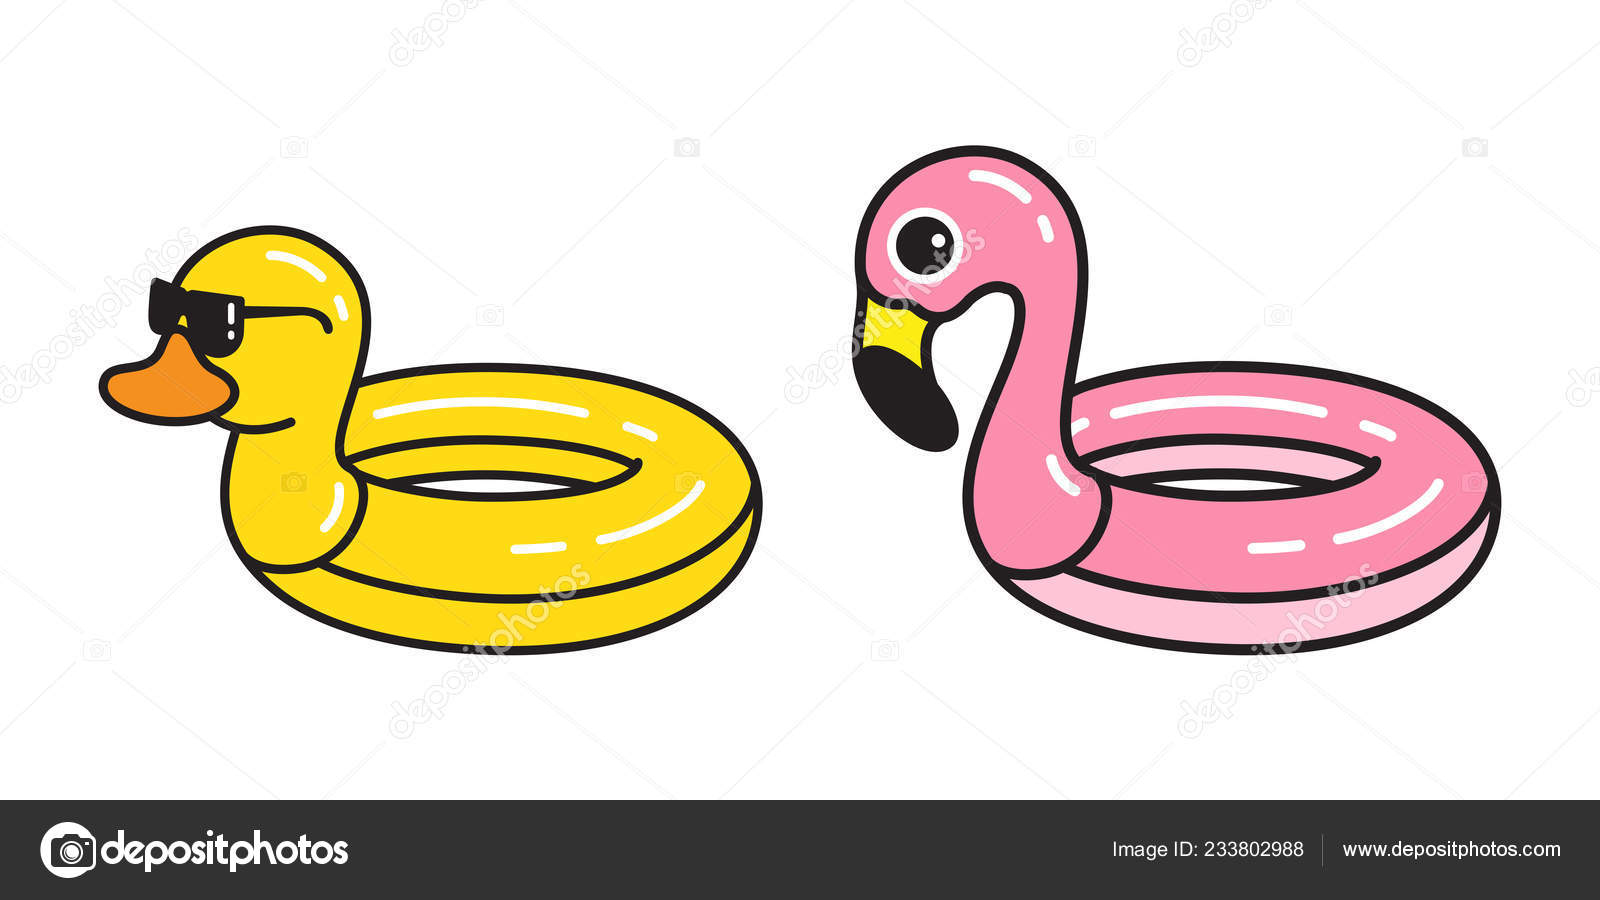 https://st4.depositphotos.com/11498520/23380/v/1600/depositphotos_233802988-stock-illustration-flamingo-duck-vector-swimming-ring.jpg